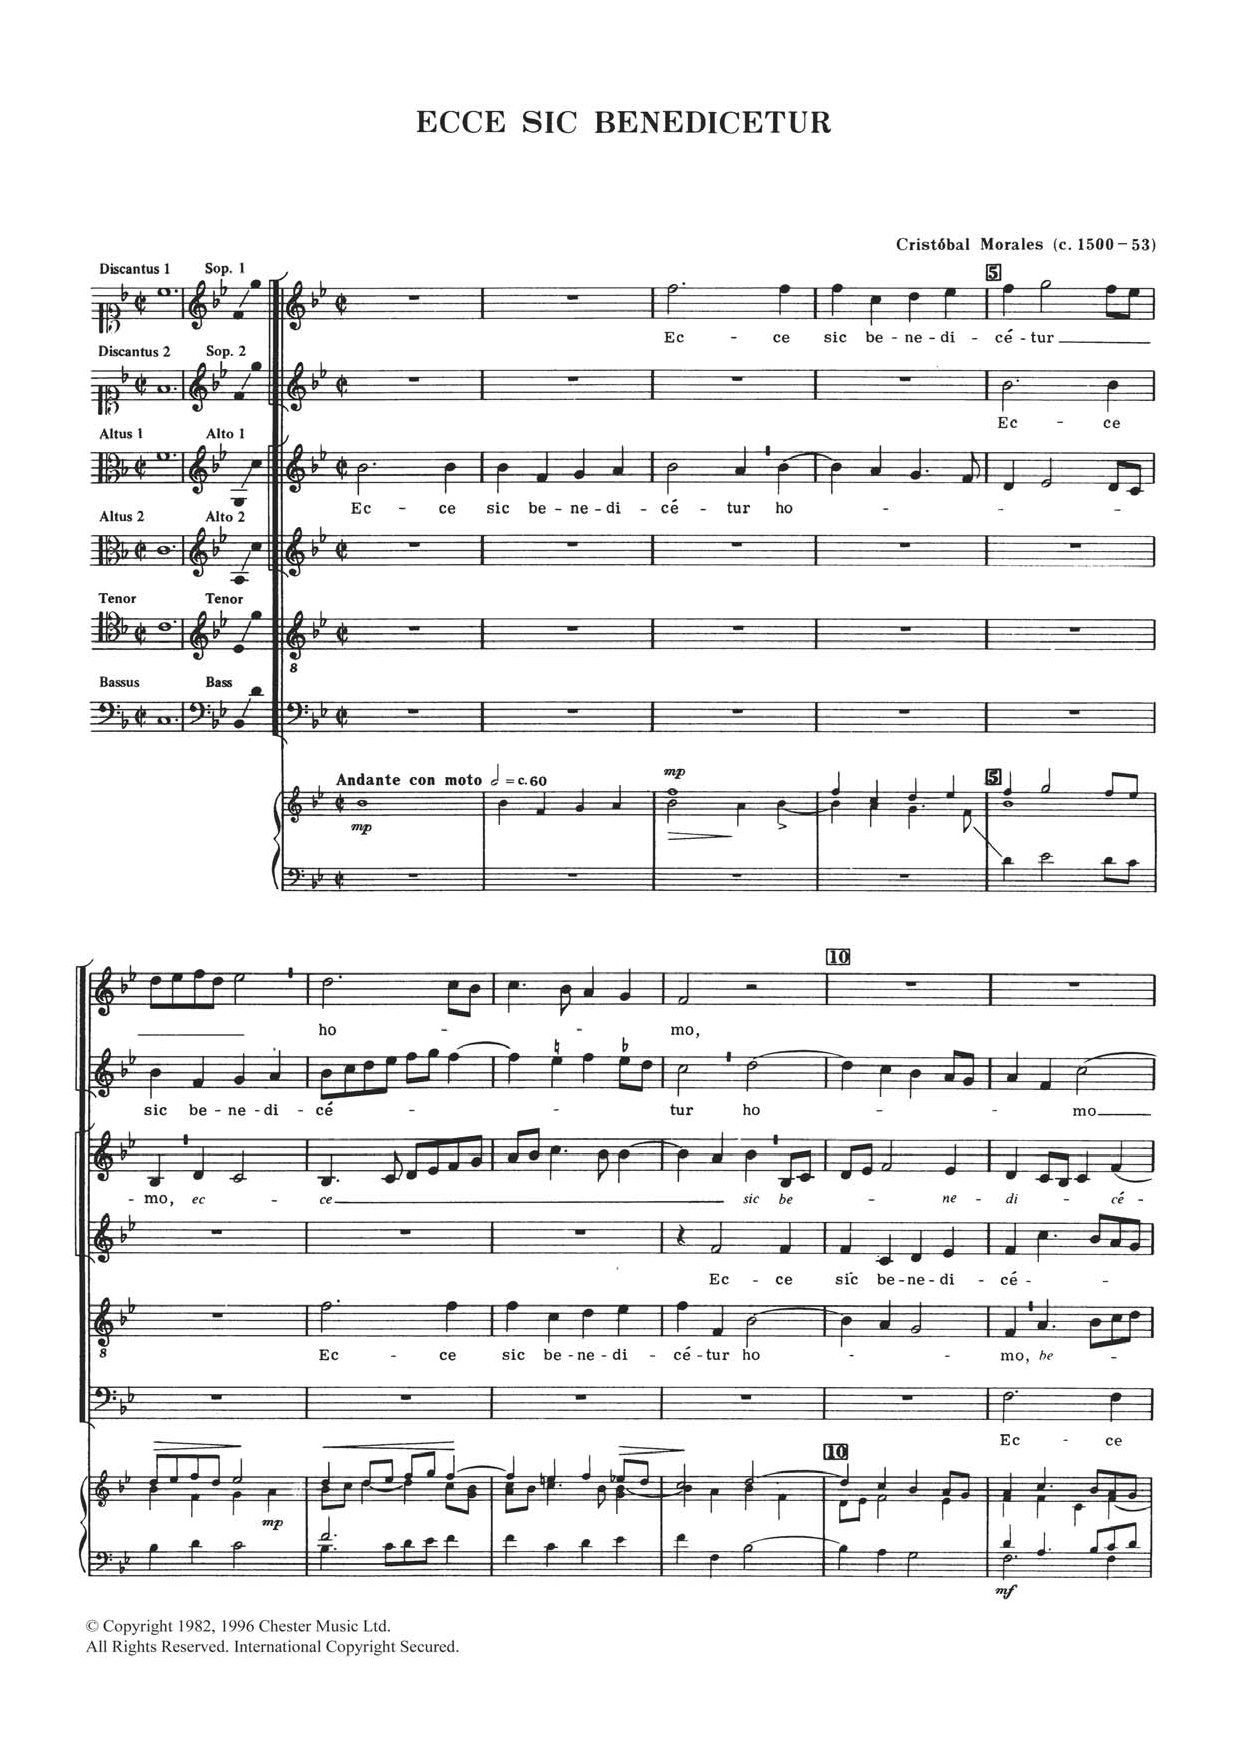 Cristobal Morales Ecce Sic Benedicetur Sheet Music Notes & Chords for Choral SAATB - Download or Print PDF